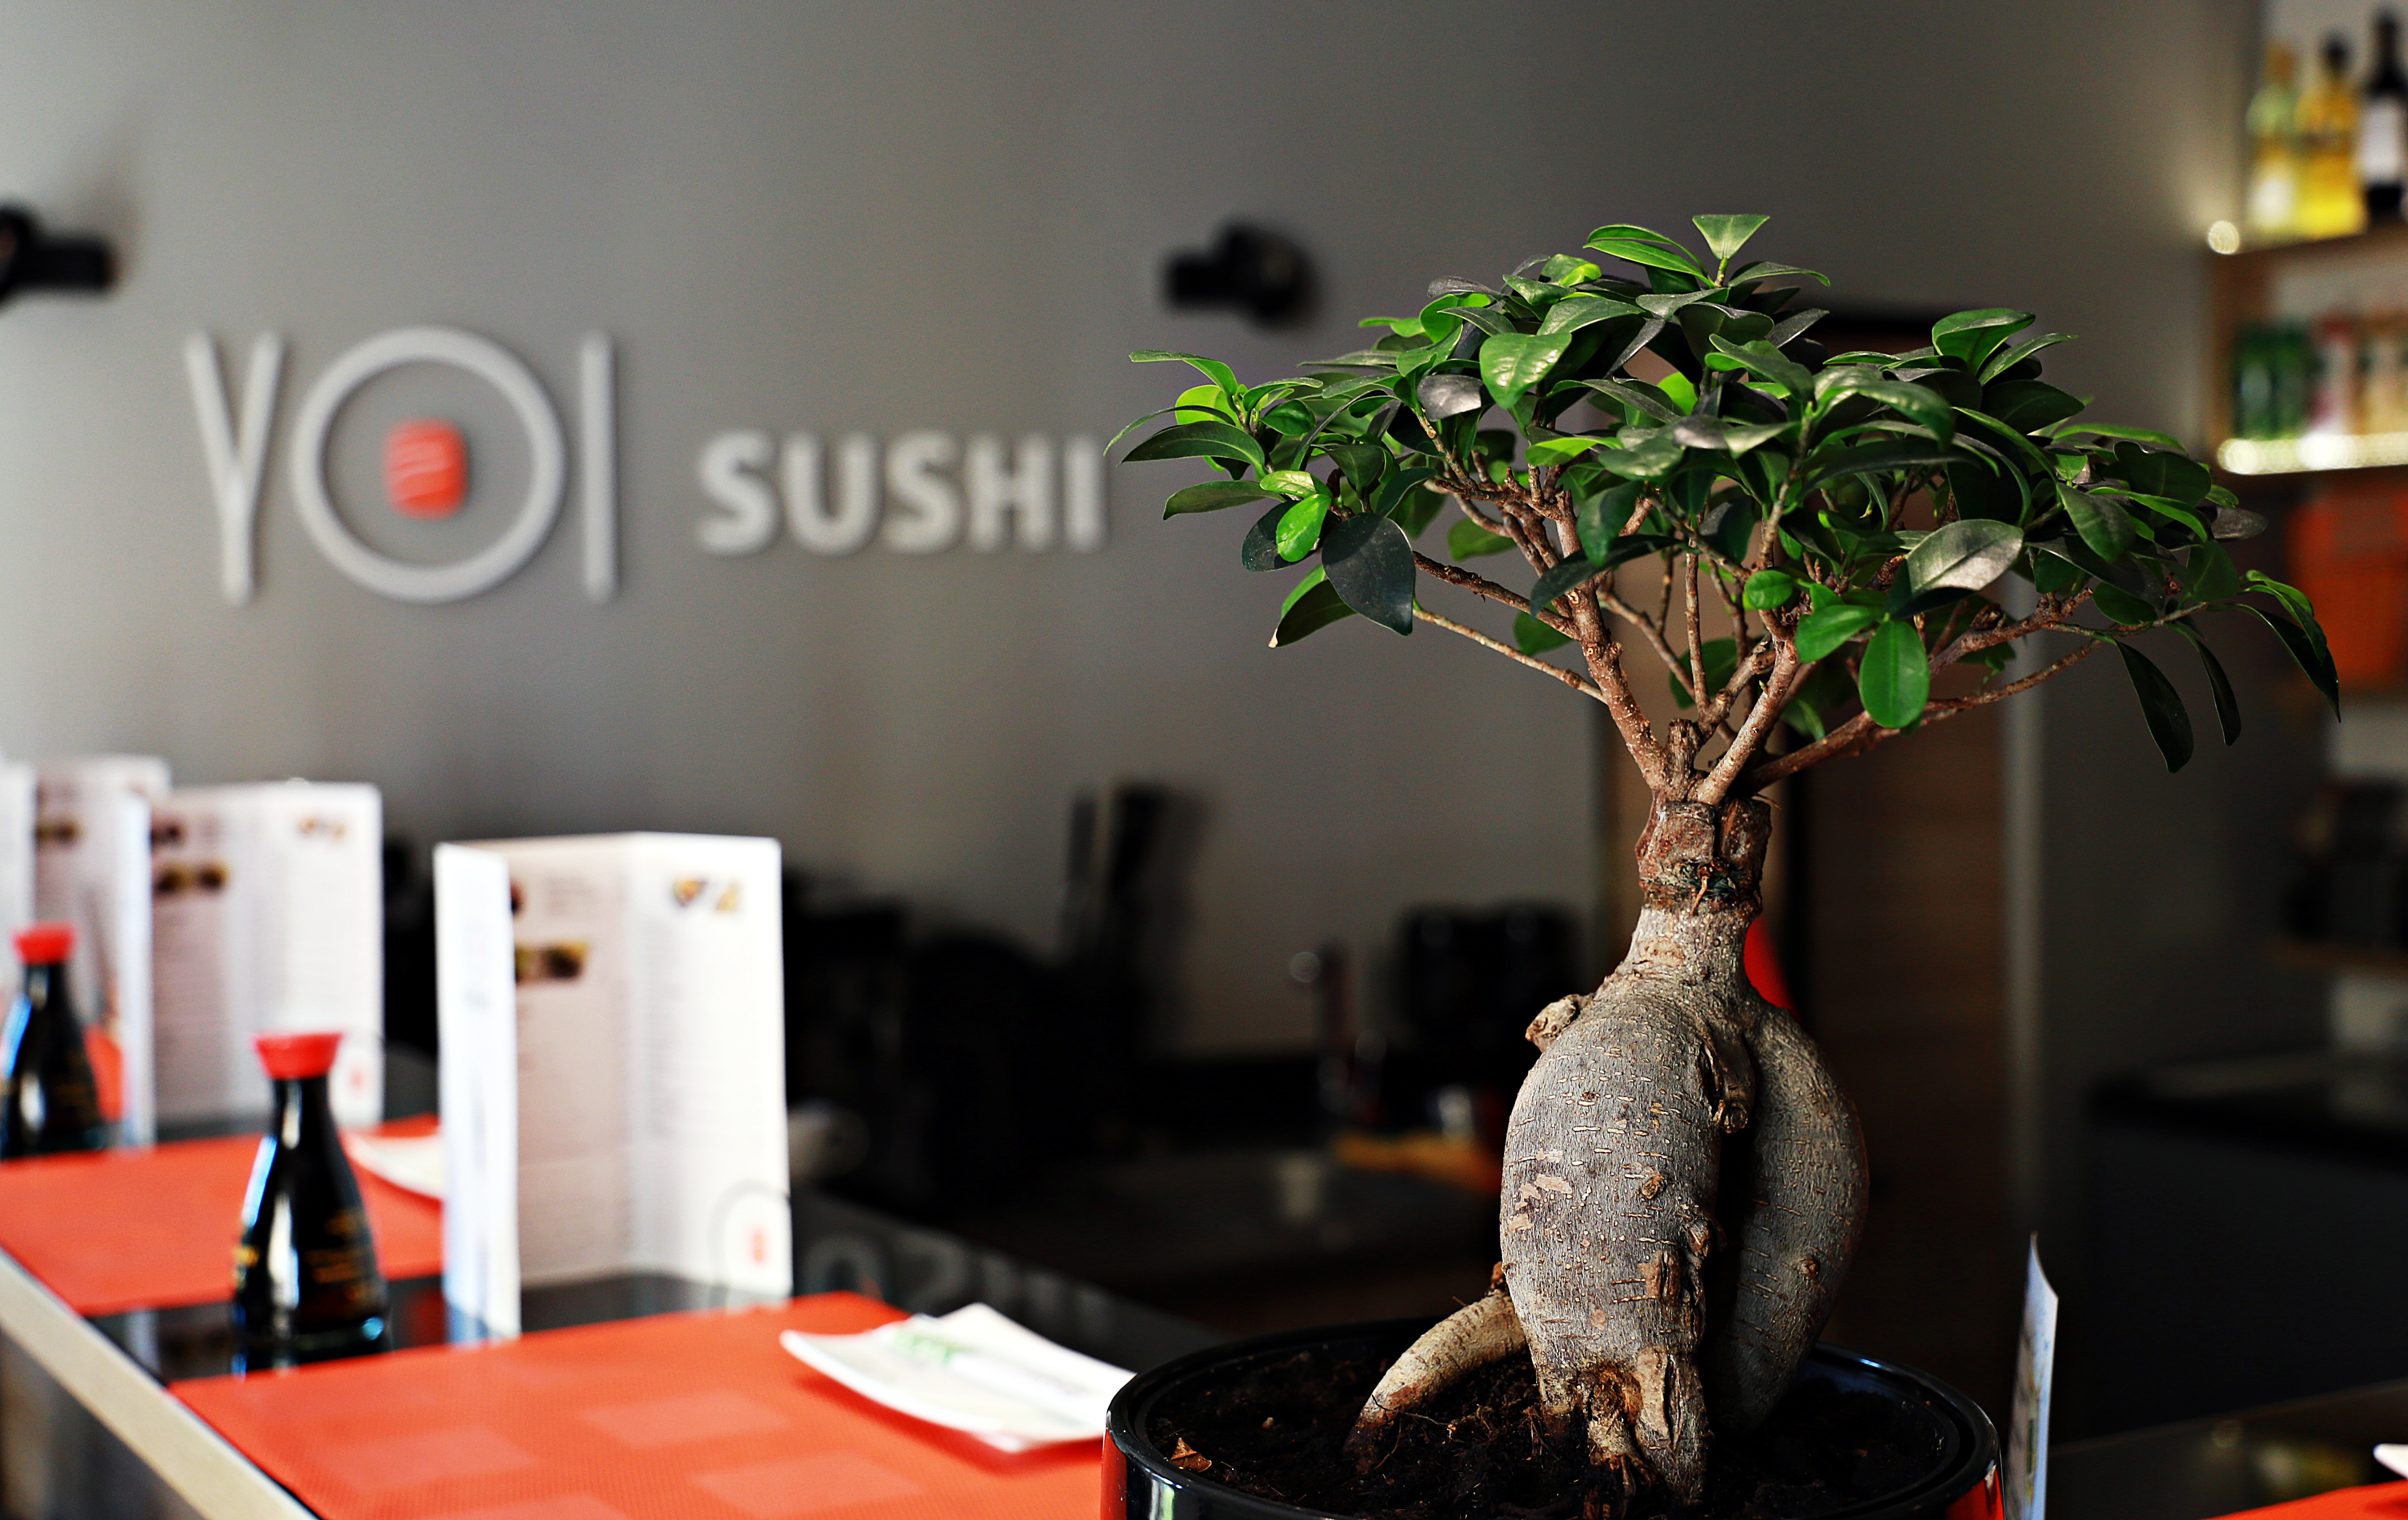 Restauracja Yoi Sushi Olsztyn - Powrót